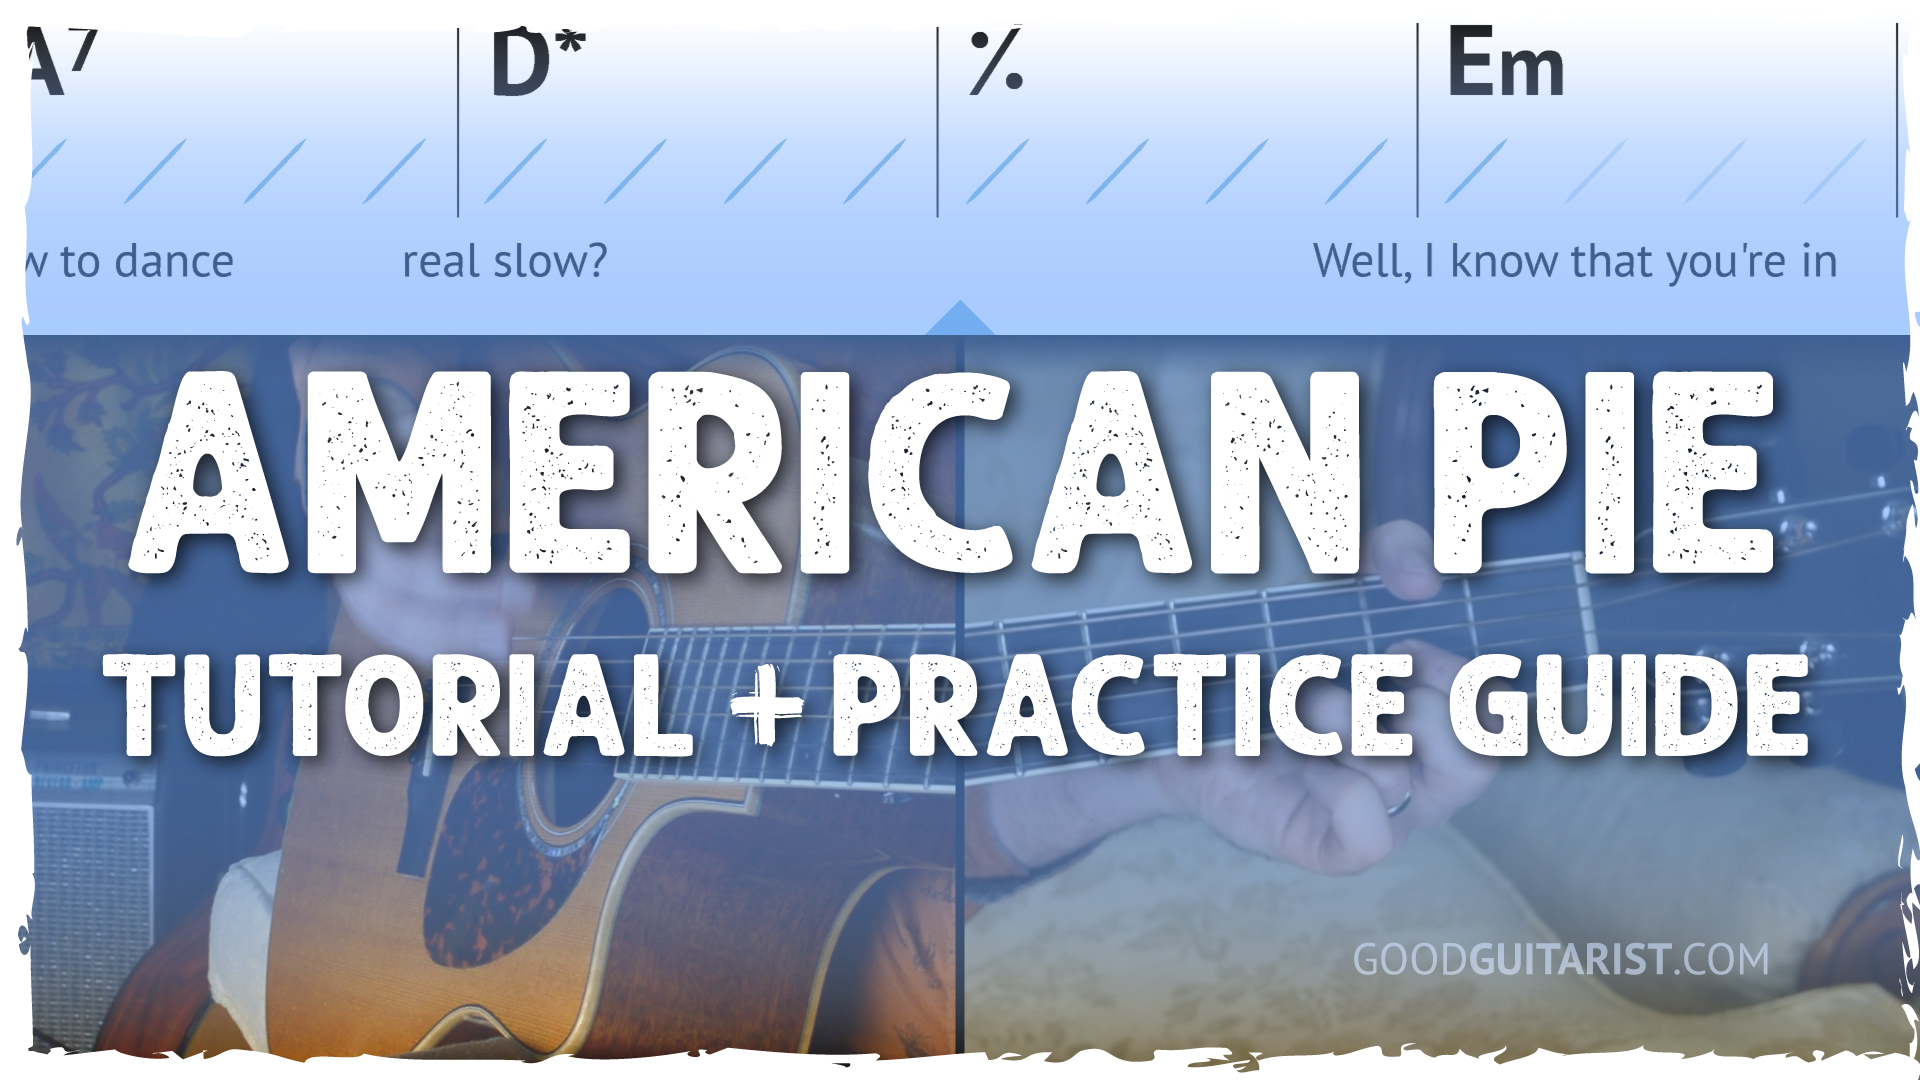 American Pie Guitar Tutorial Don McLean Guitar Lesson, Chords + Strumming